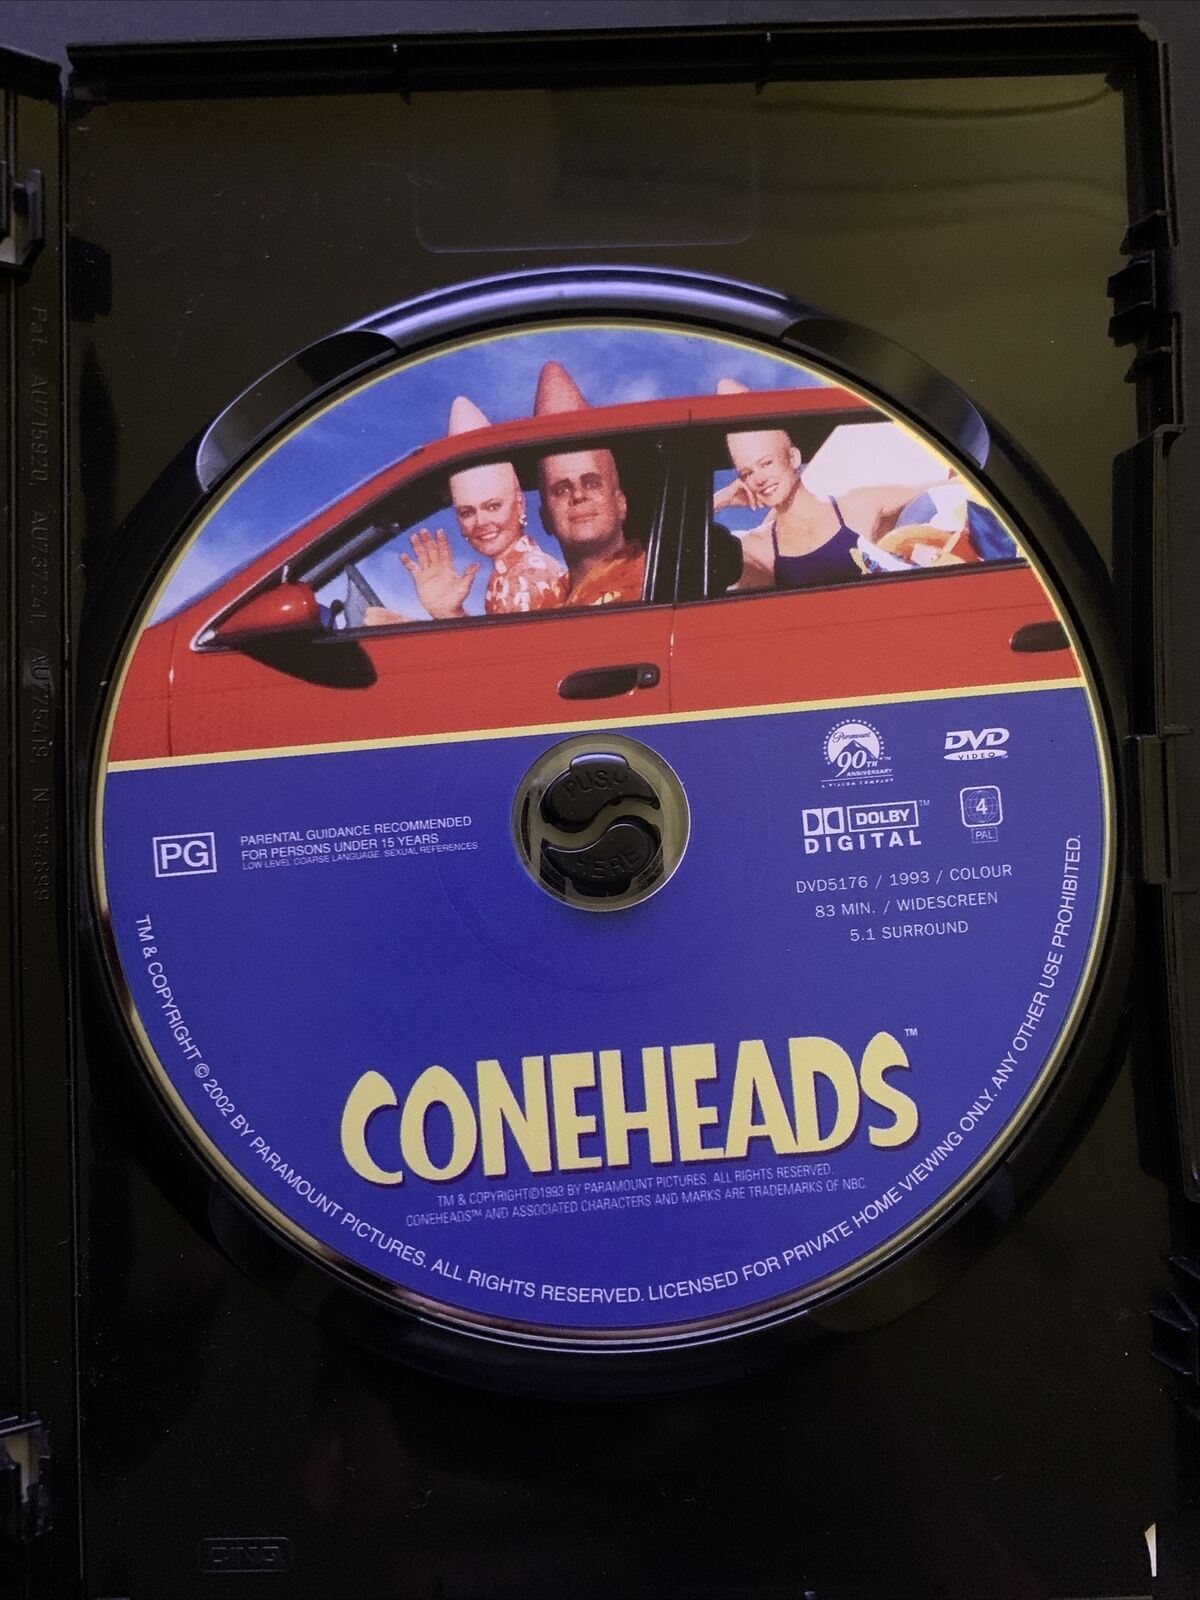 Coneheads (DVD, 1993) Dan Aykroyd, Jane Curtin, Robert Knott. Region 4